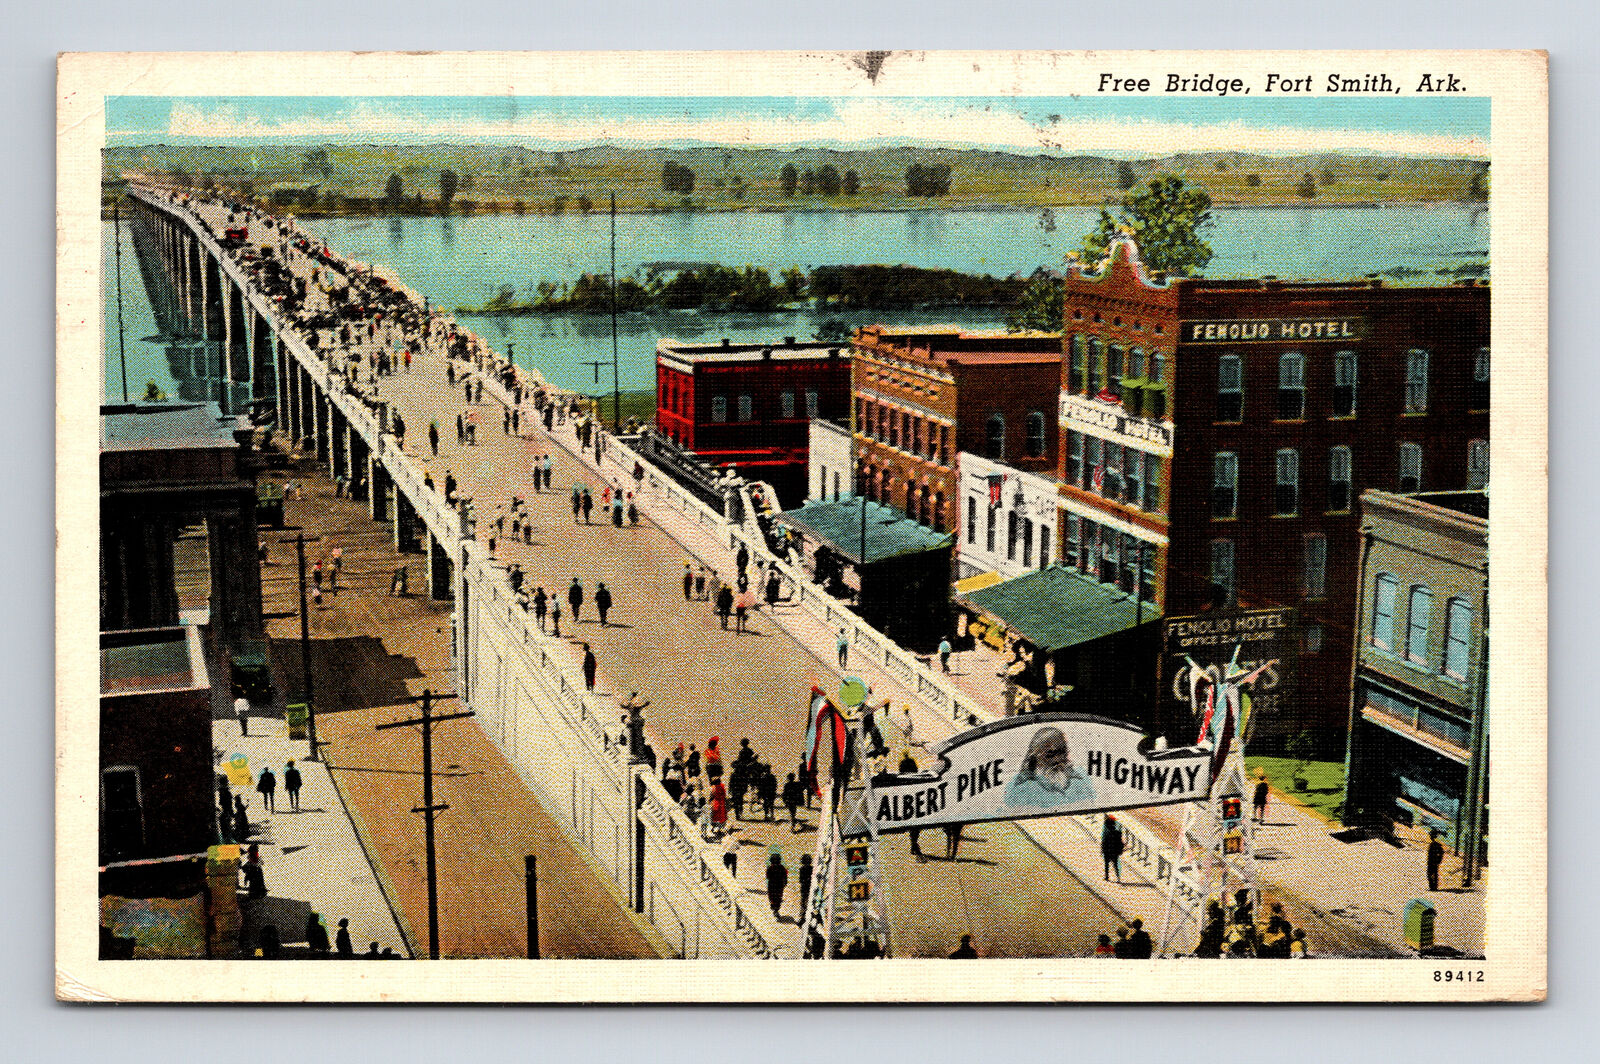 1942 Free Bridge Albert Pike Highway Fort Smith AR Postcard